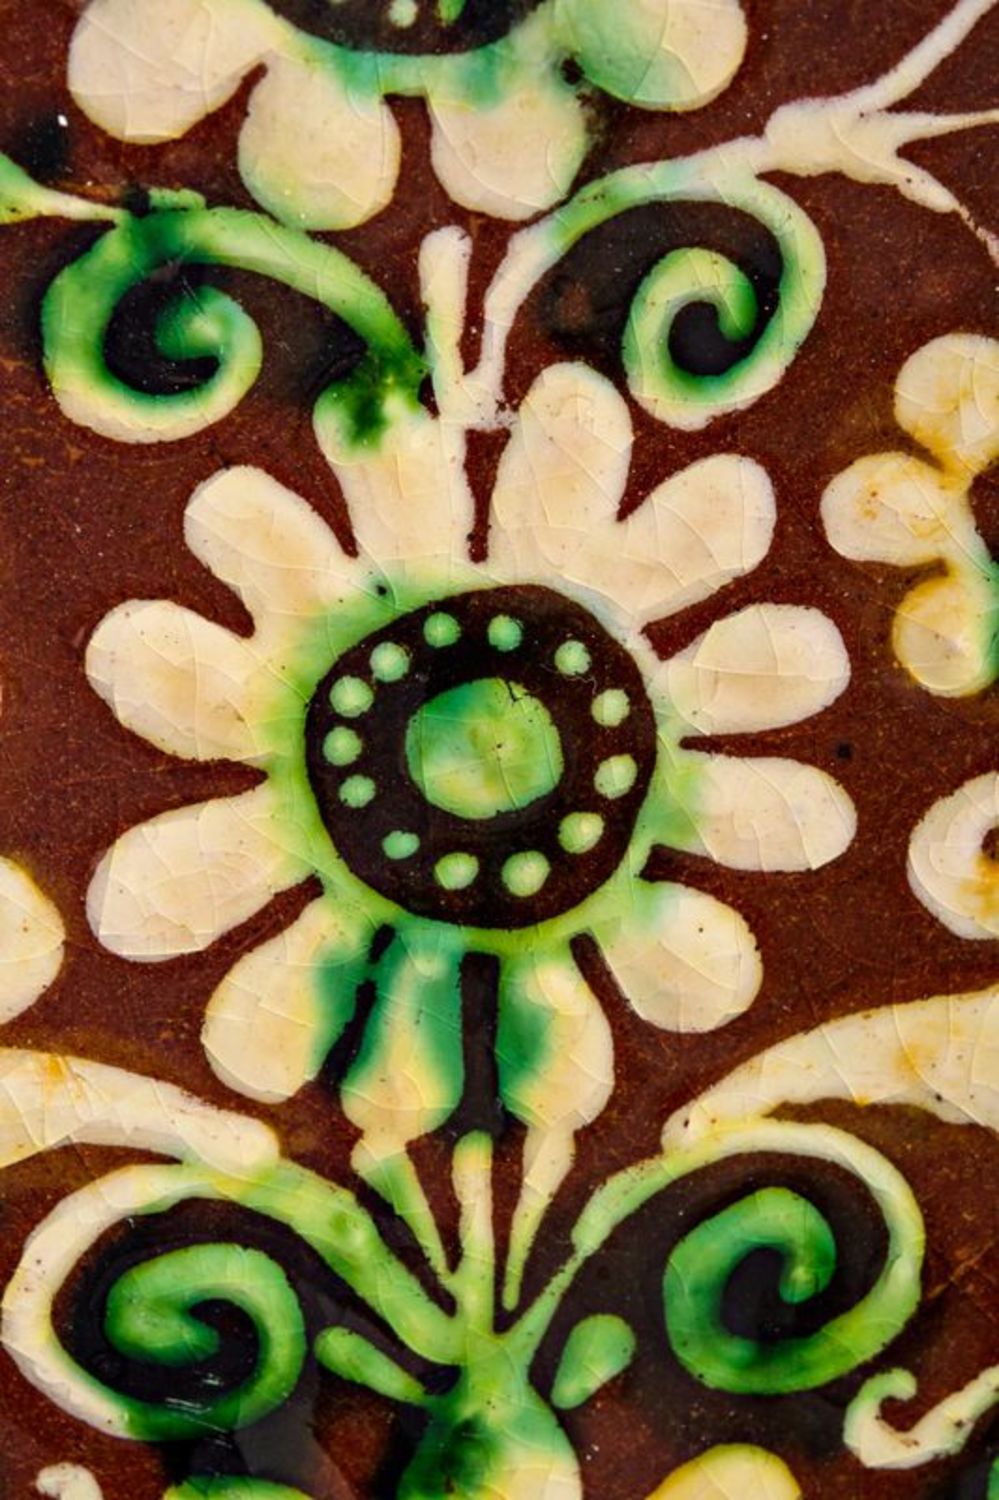 Decorative ceramic plate photo 2